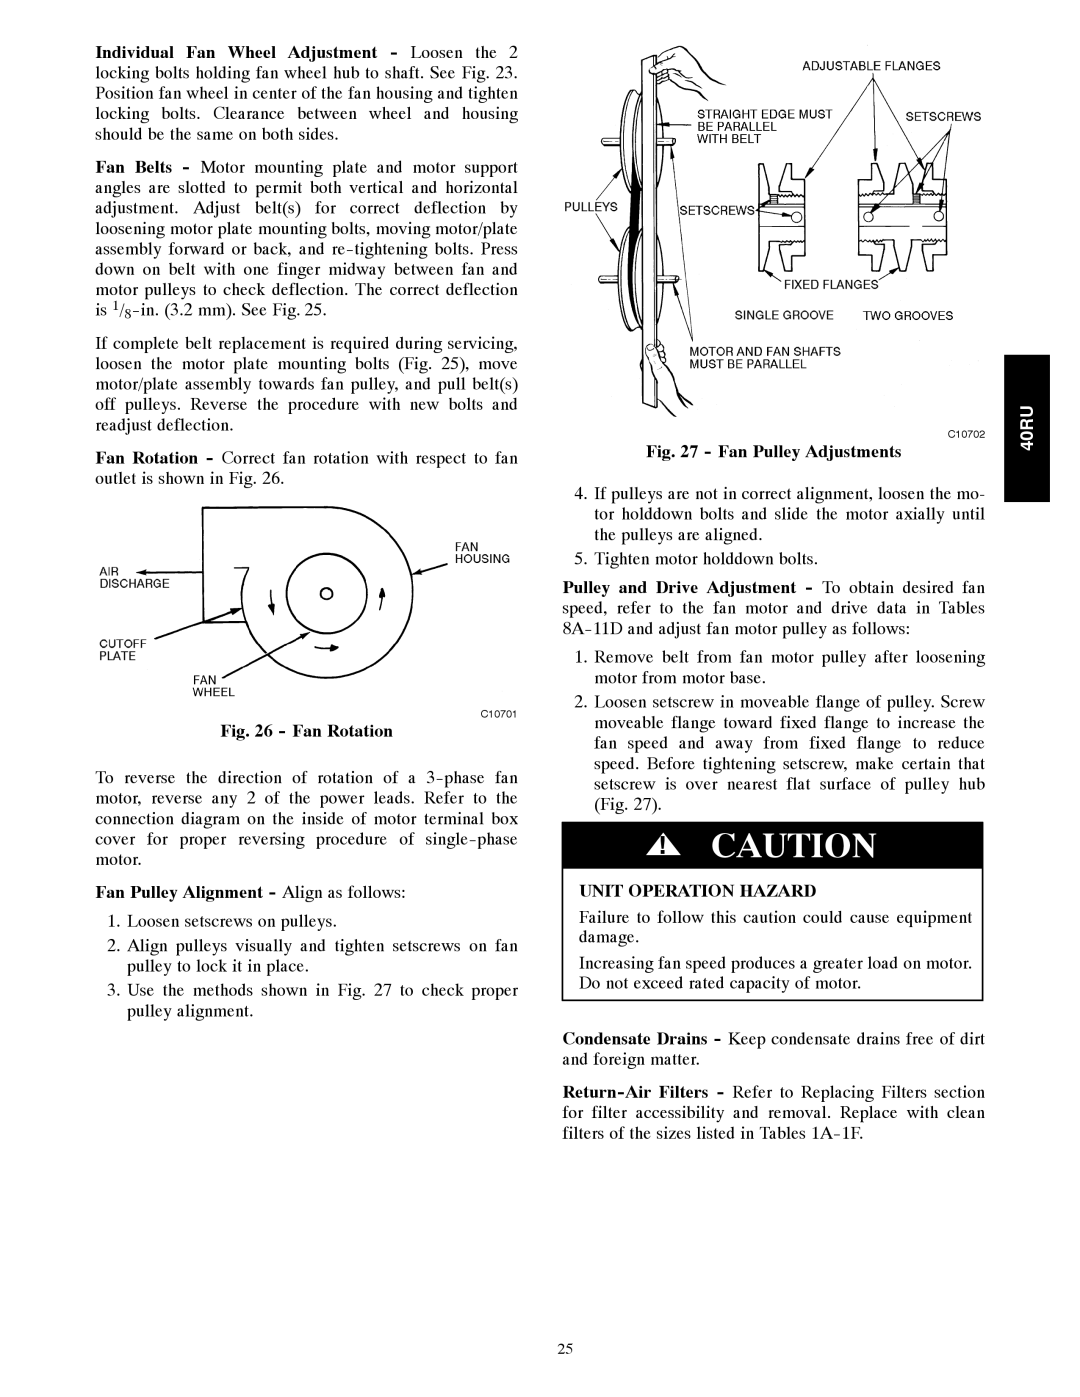 Carrier 40RU manual Fan Rotation, Fan Pulley Alignment - Align as follows, Fan Pulley Adjustments, Unit Operation Hazard 